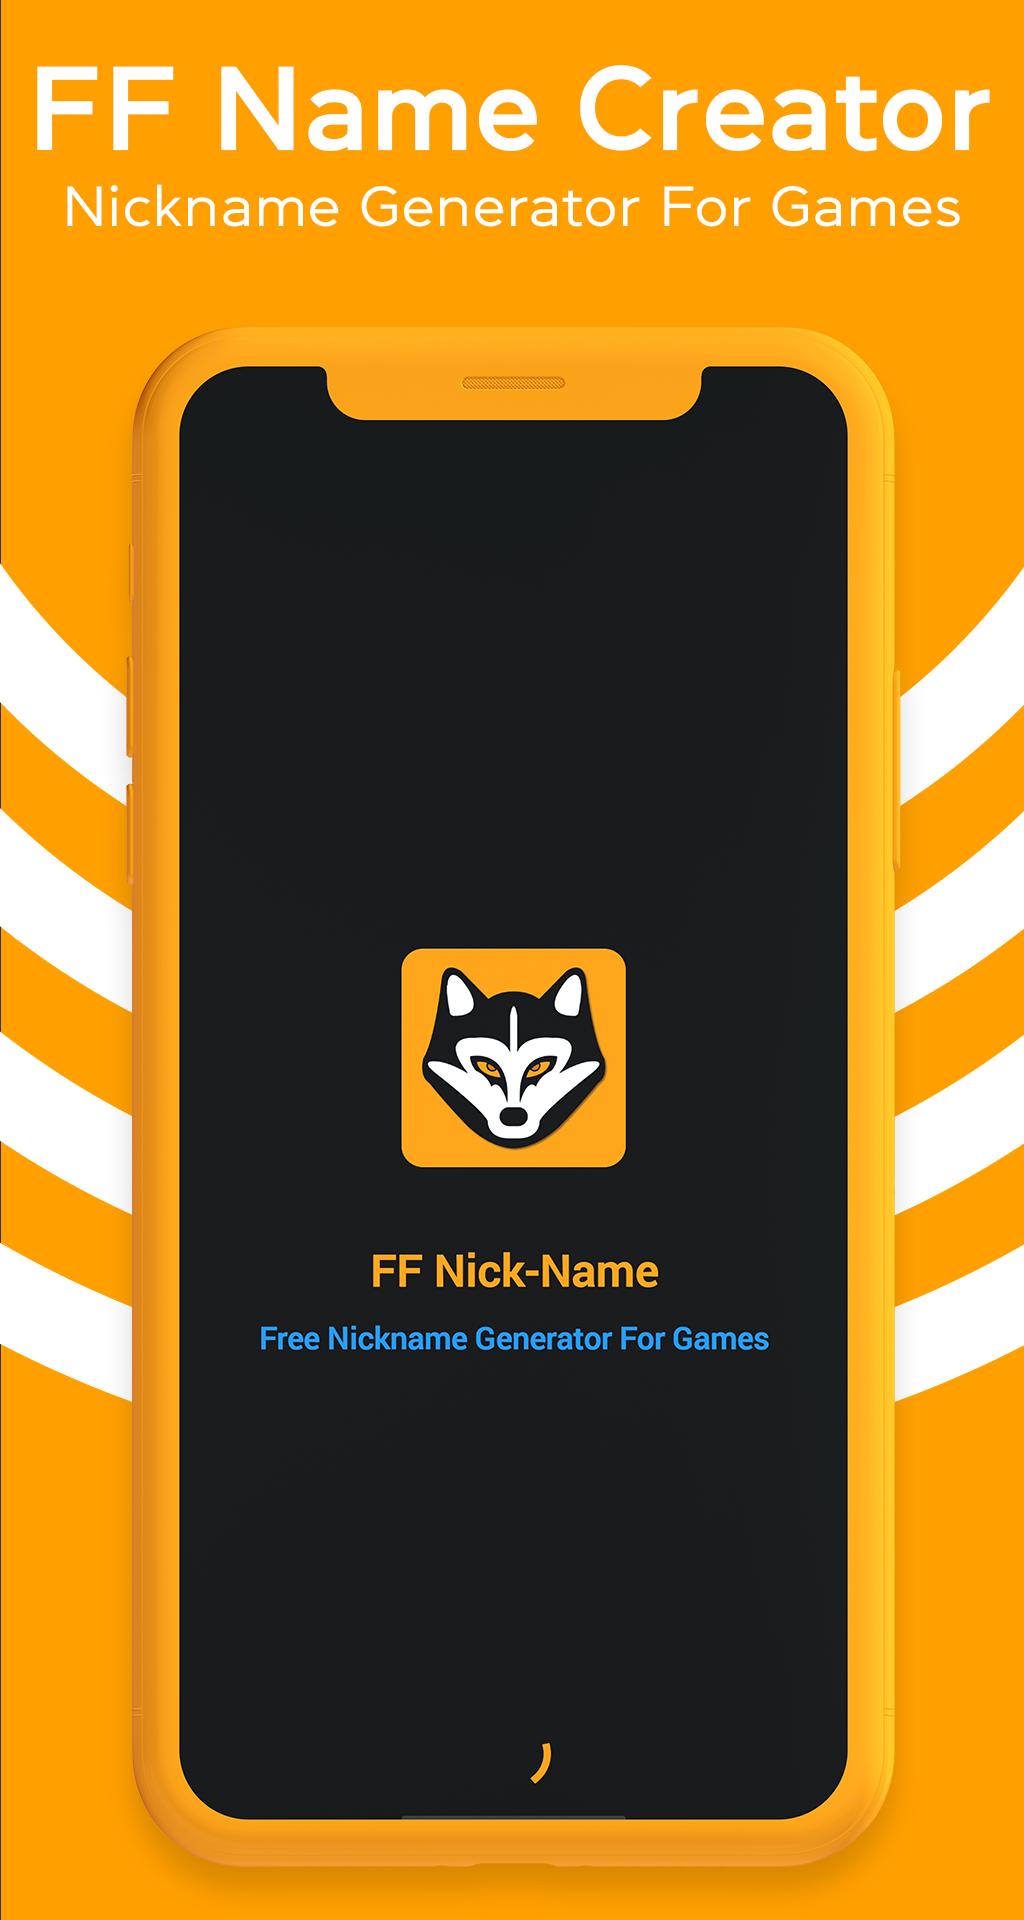 View Nickname Generator Ff Apk Pics